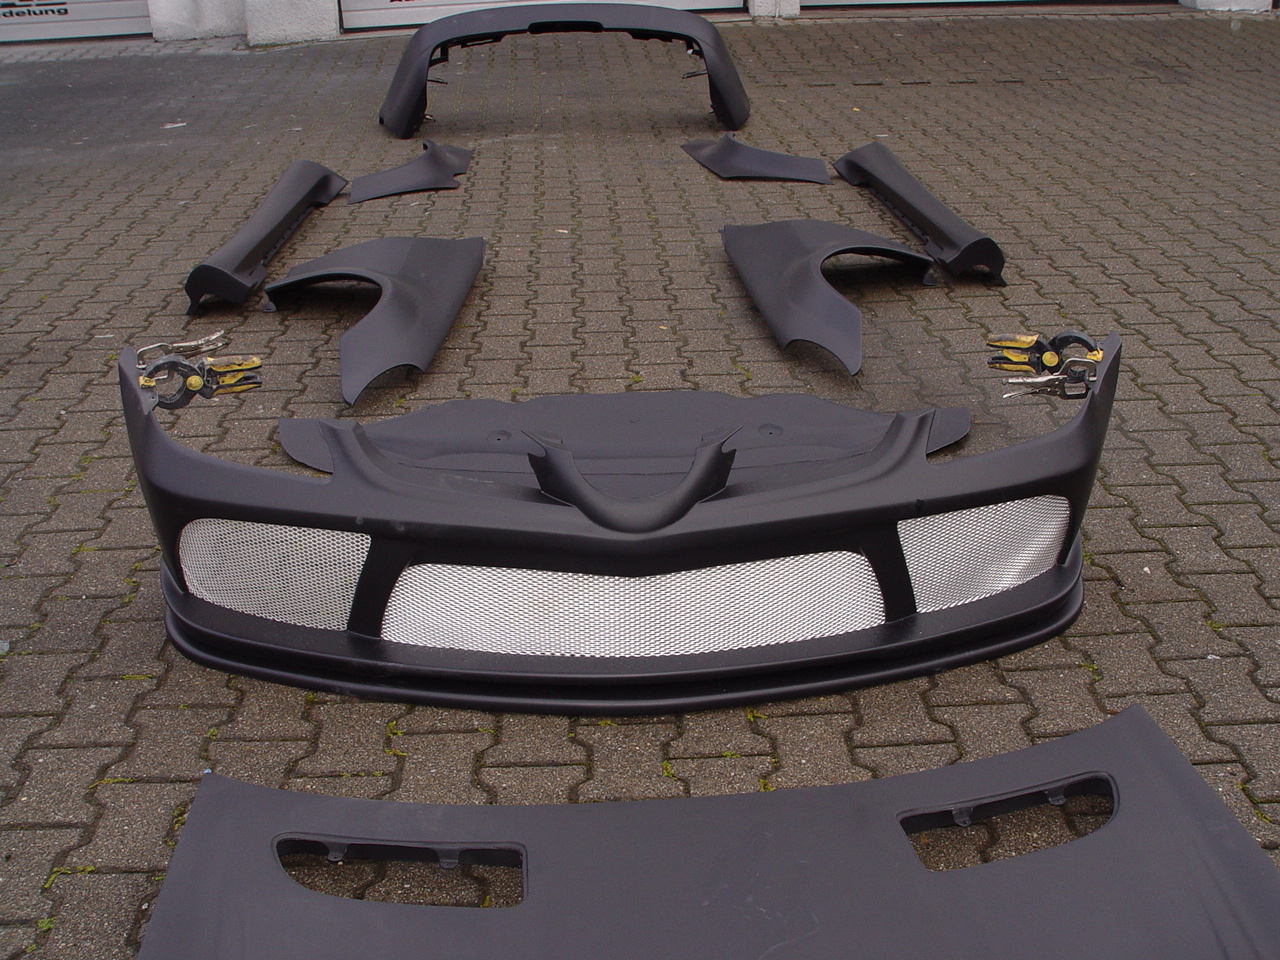 SLK R171 AMG Black Series bodykit Bausatz wide body Göckel Automobilveredelung Styling Tuning Mercedes Benz